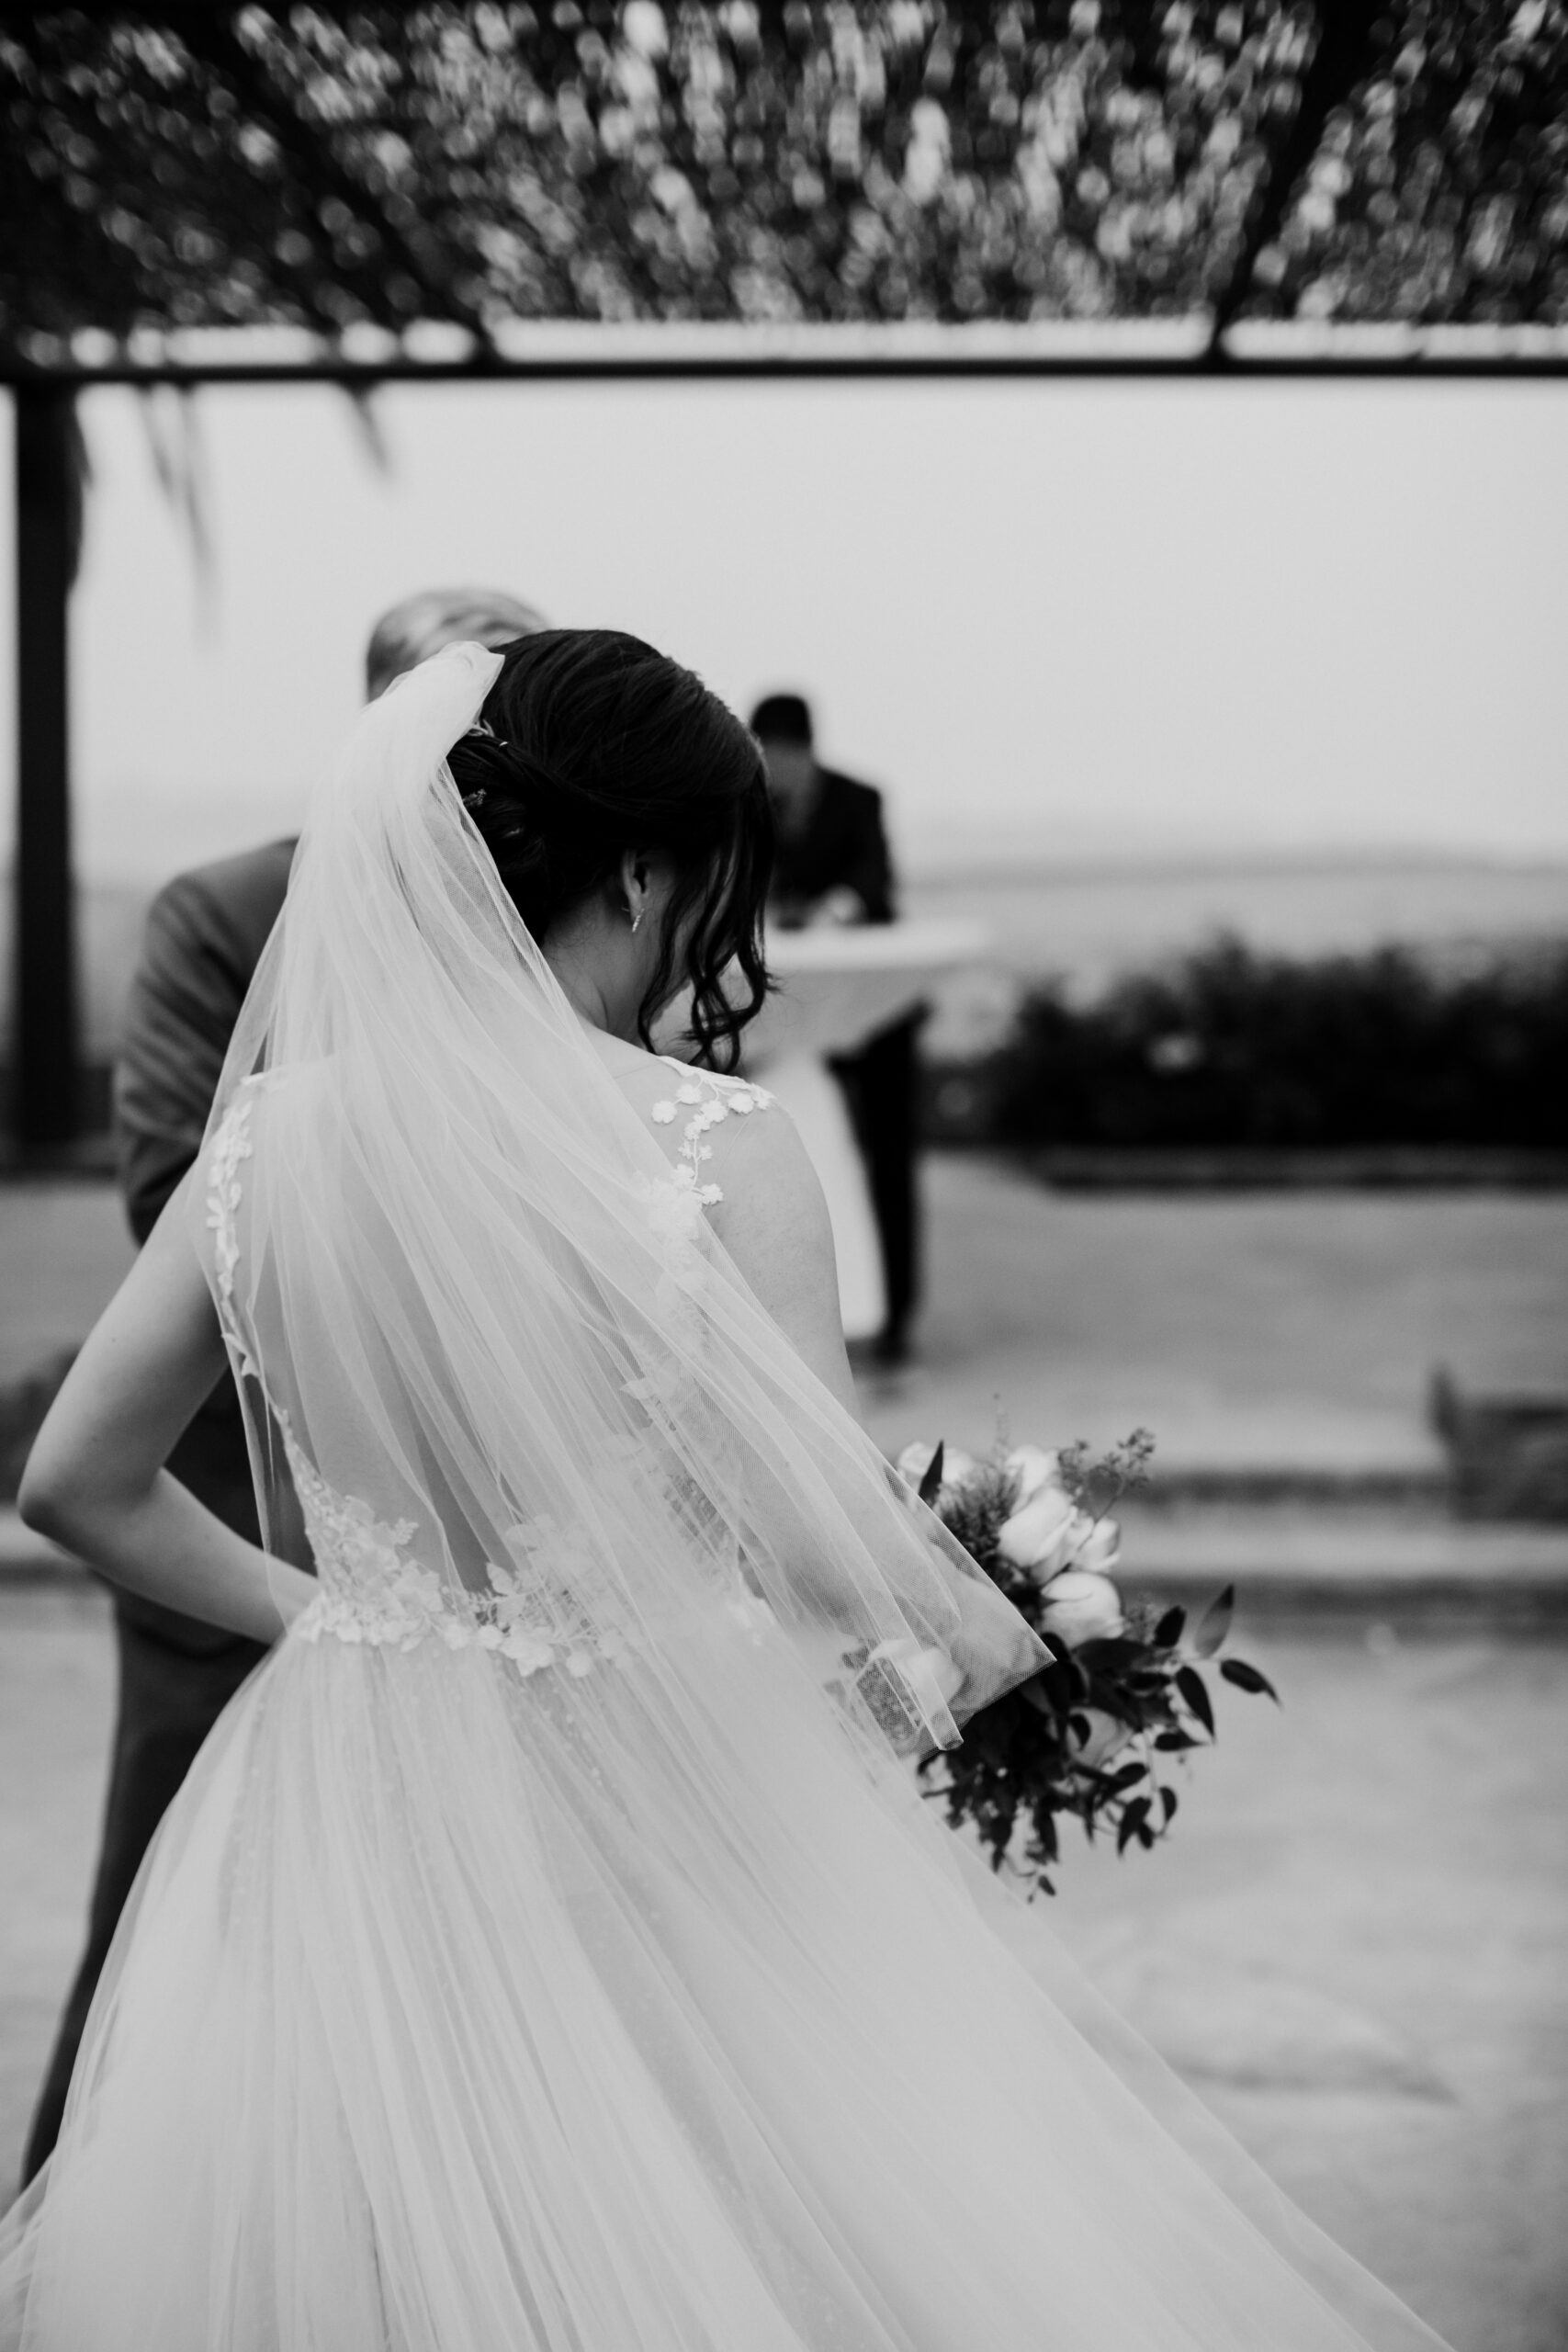 Stunning black and white shot of a bride during her vineyard wedding